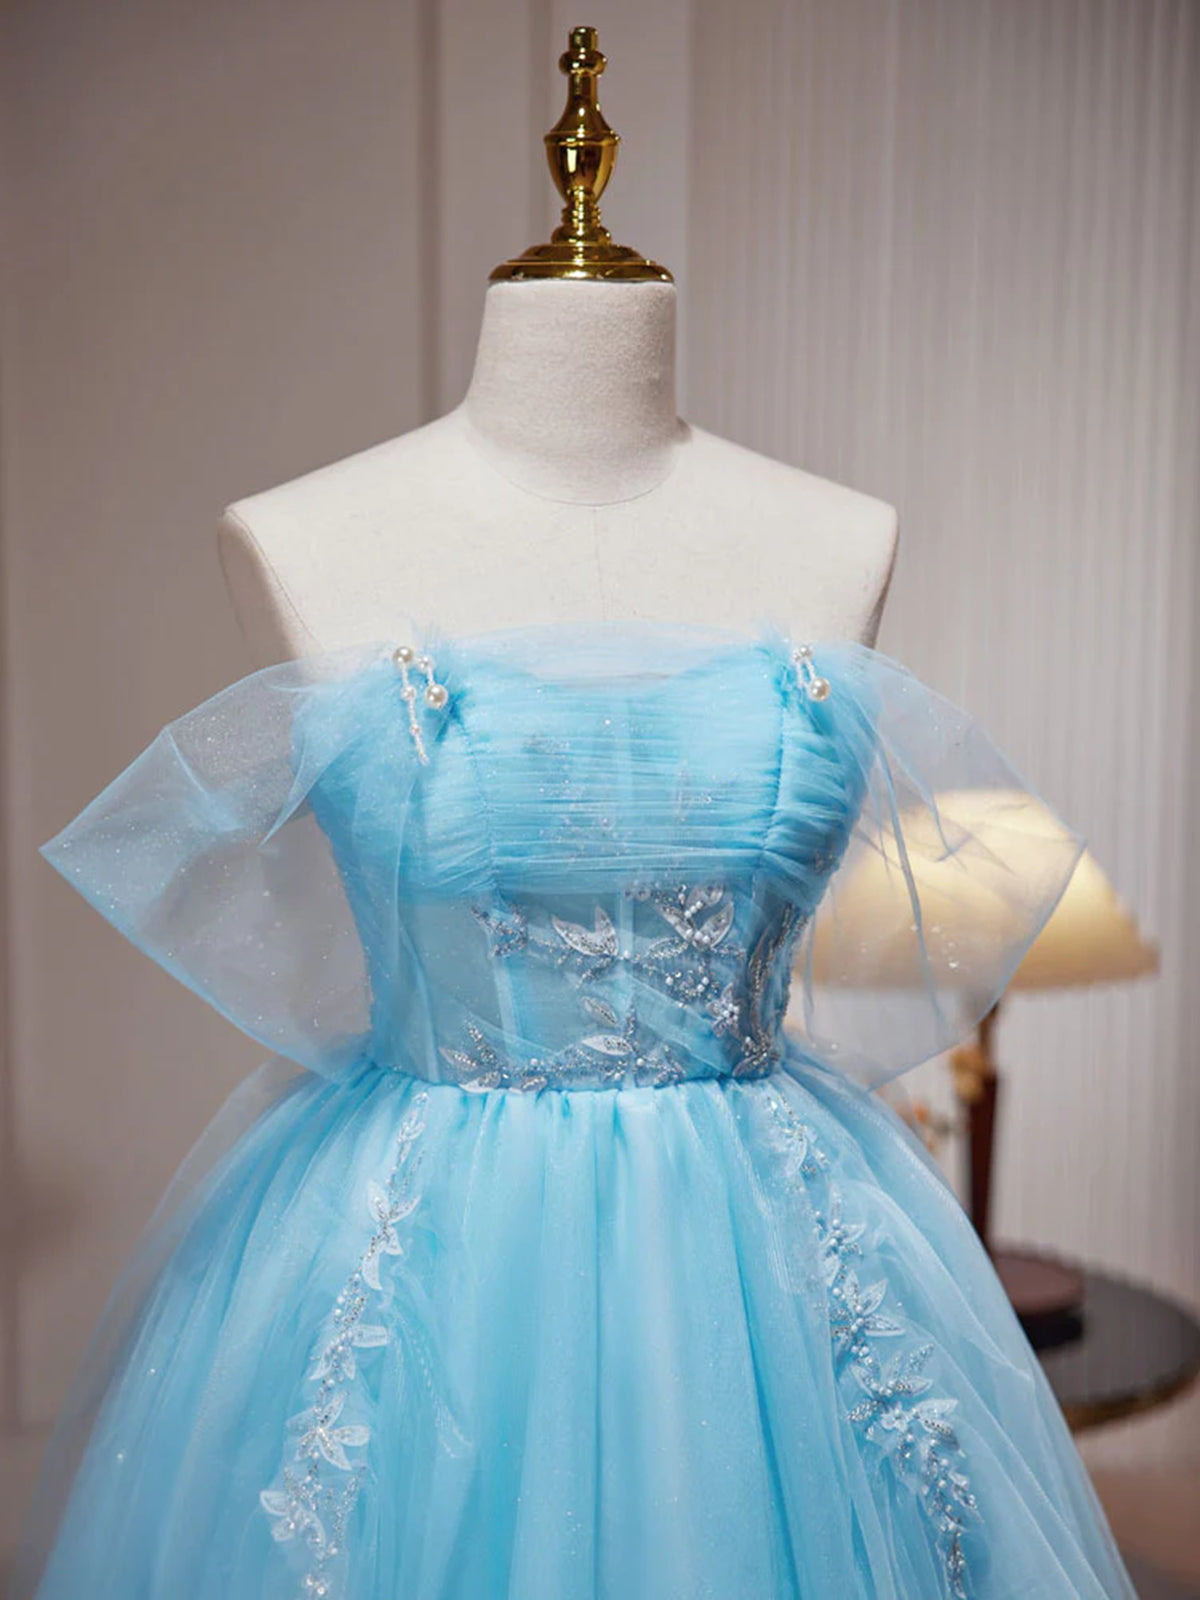 Bridesmaid Dresses Online, Off the Shoulder Short Blue Prom Dresses, Short Blue Lace Formal Homecoming Dresses